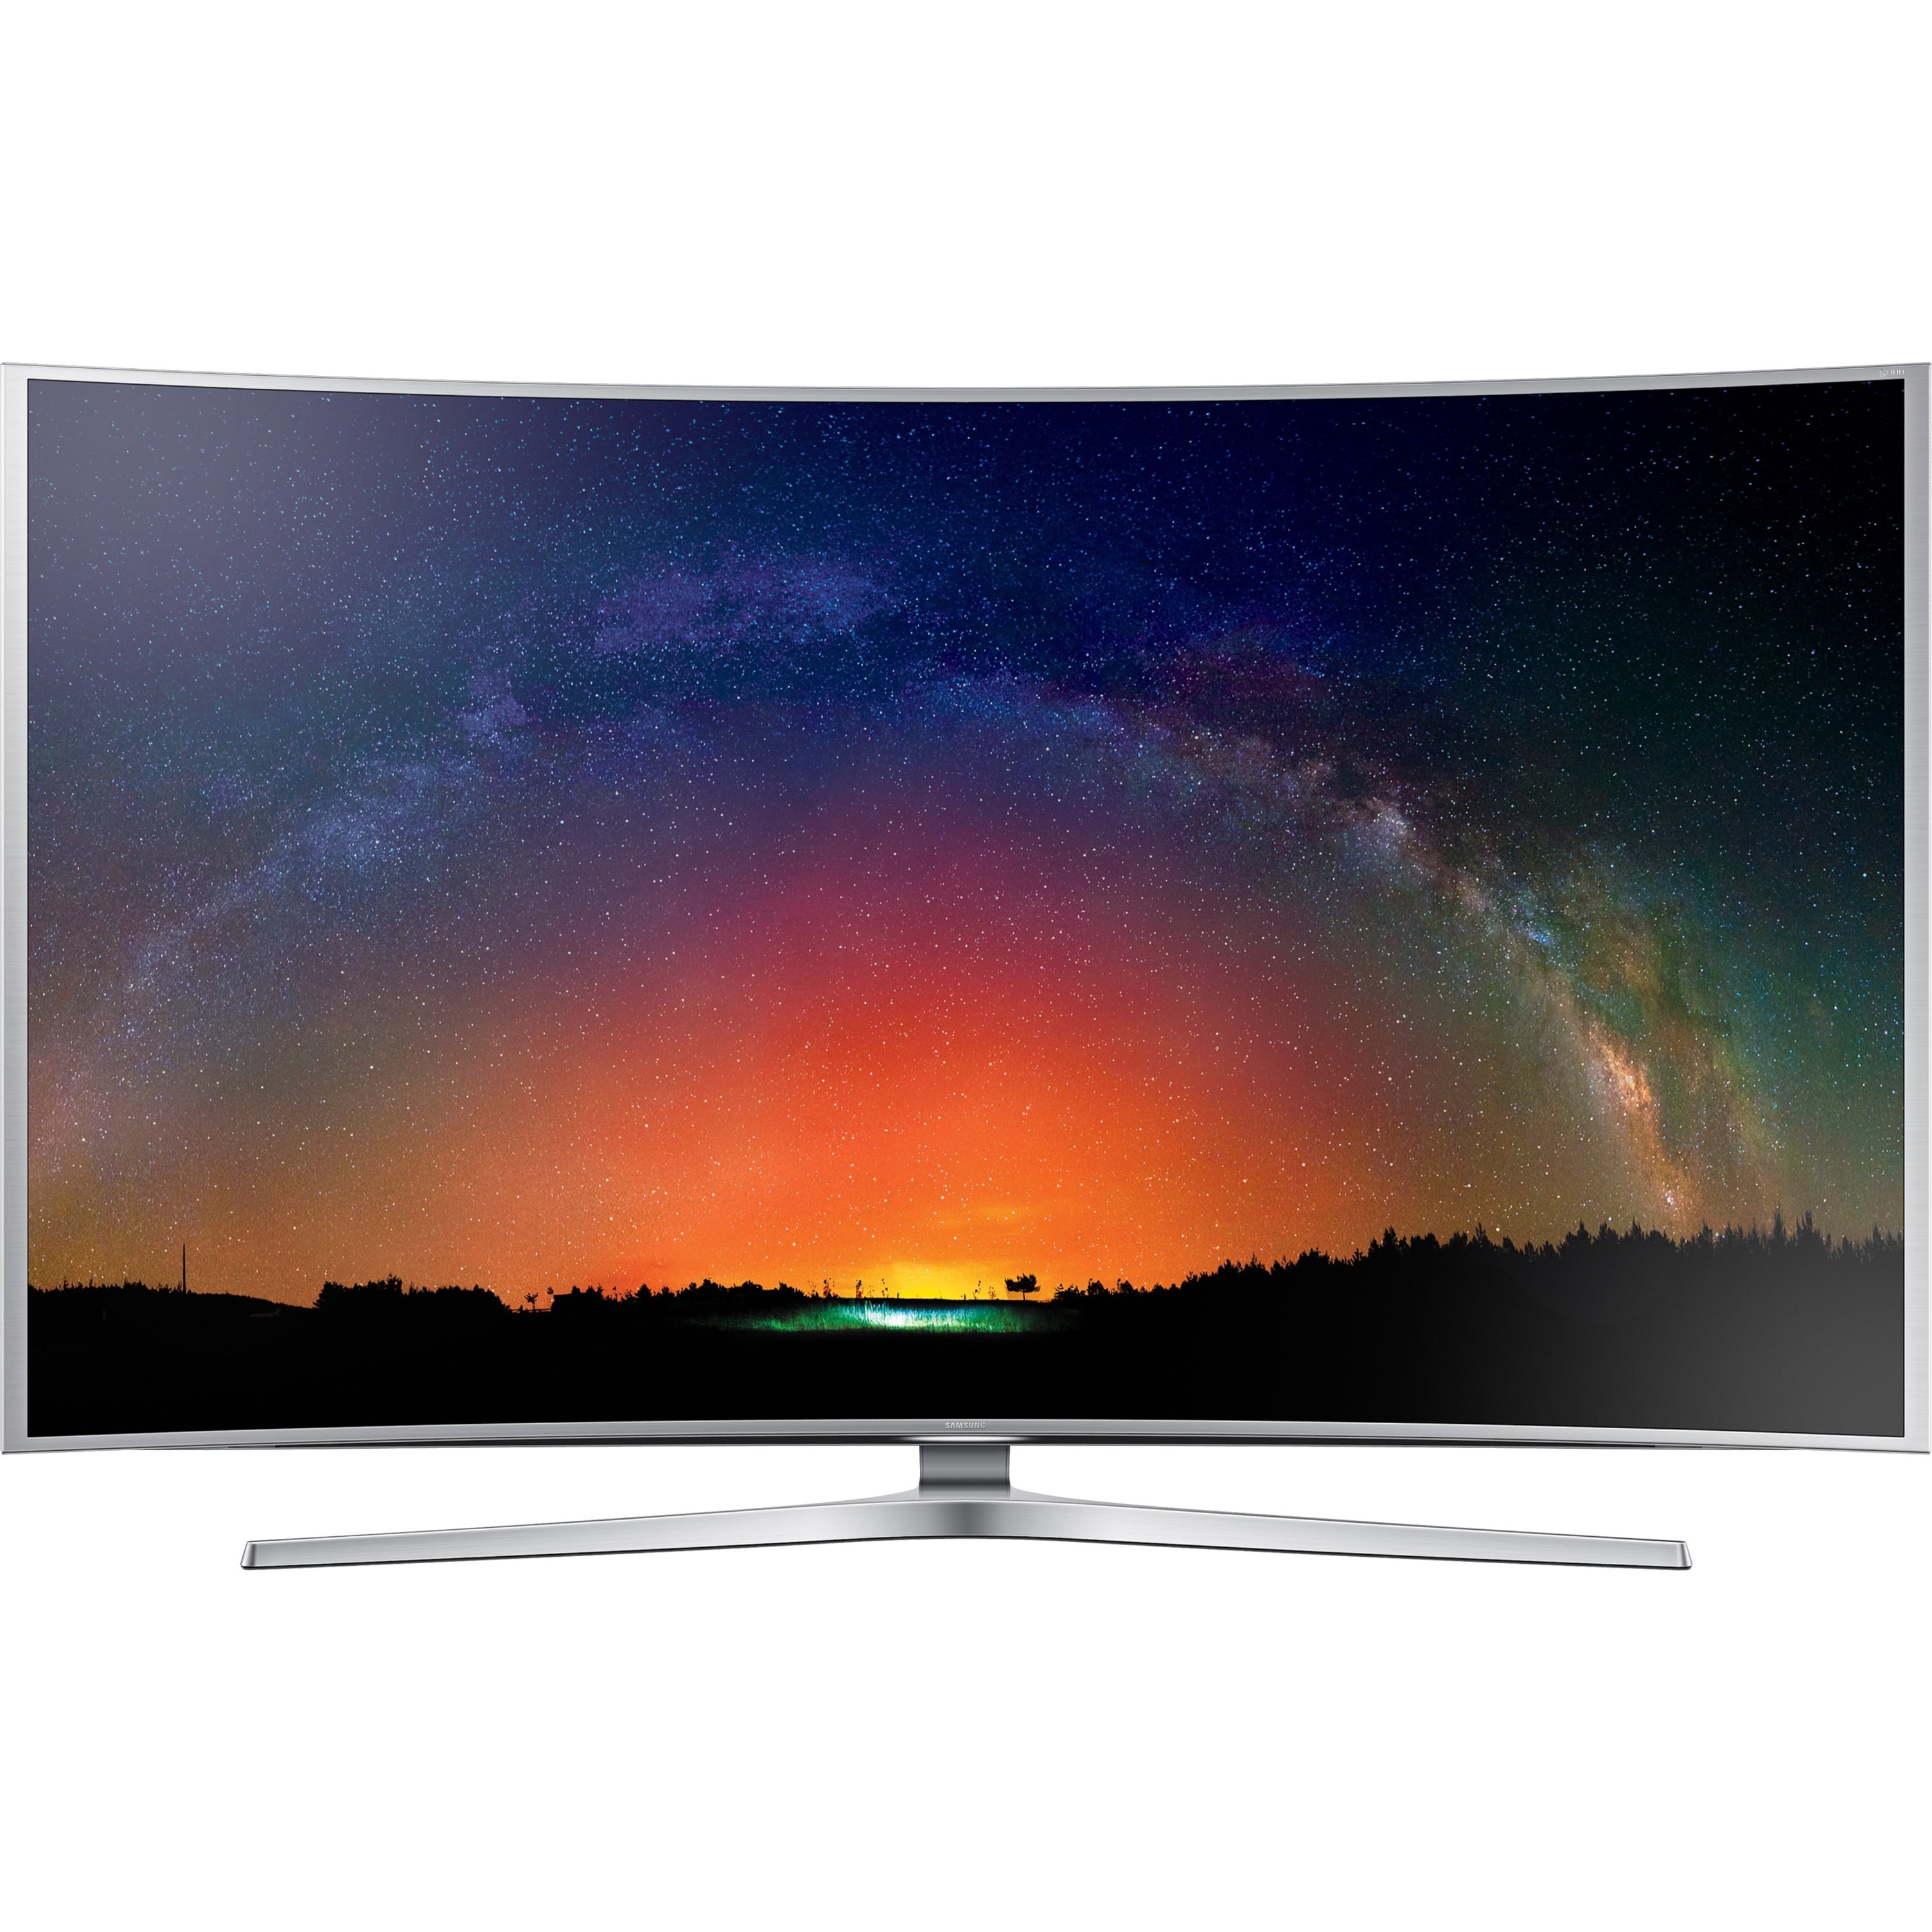 Телевизор самсунг цены отзывы. Samsung ue65js9000. Samsung ue55js9000. Samsung ue55js7200u. Samsung ue65js9000t телевизор.